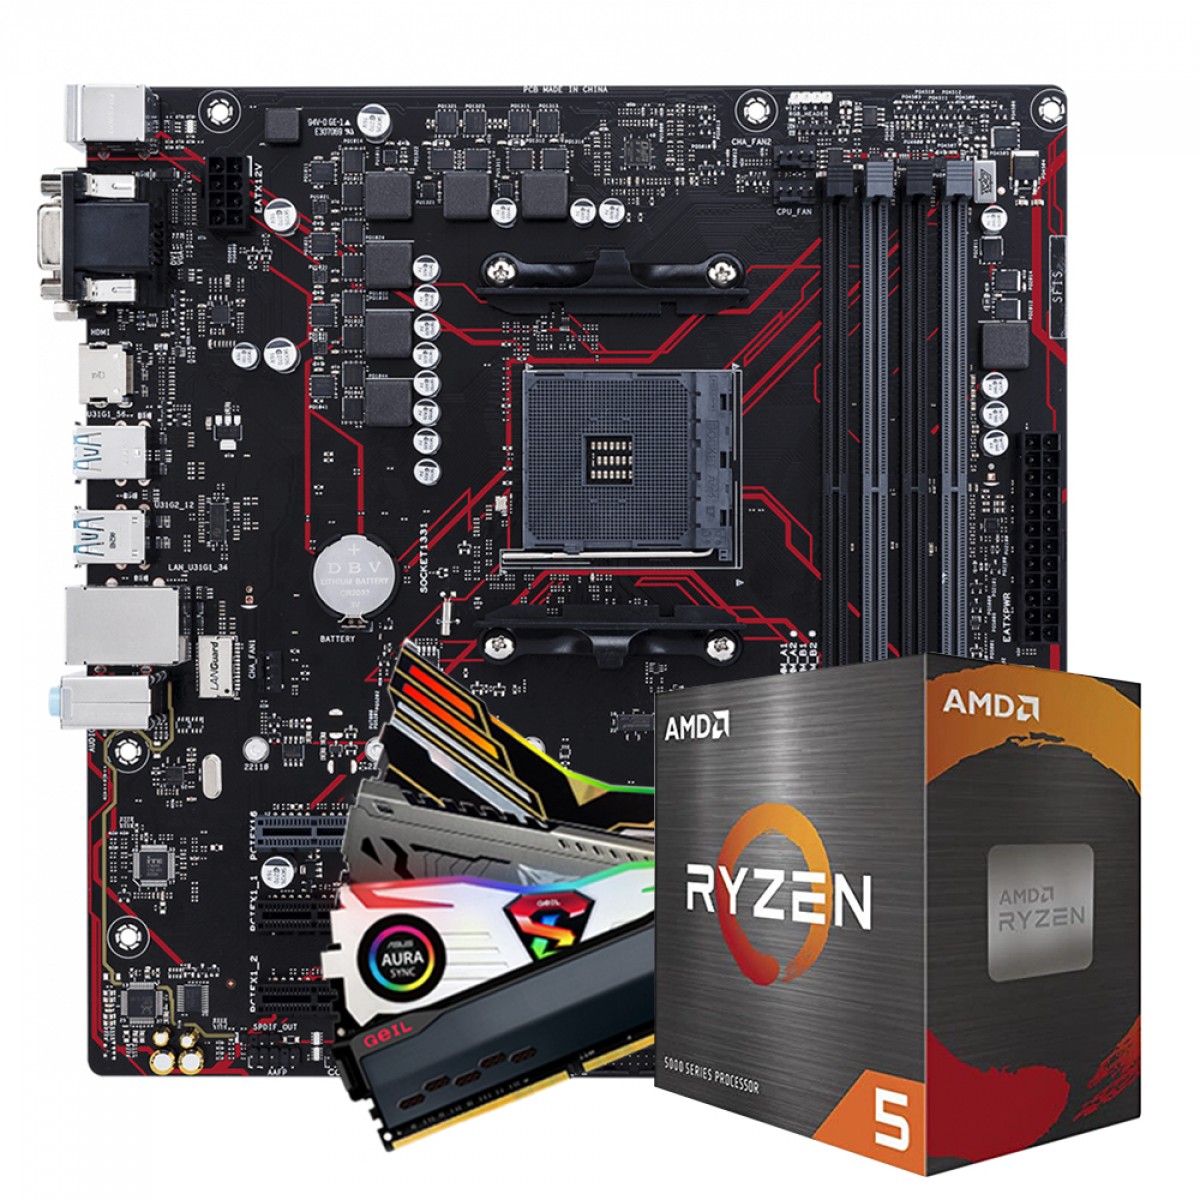 Kit Upgrade, AMD Ryzen 5 3600 + Placa Mãe B550 + 16GB DDR4